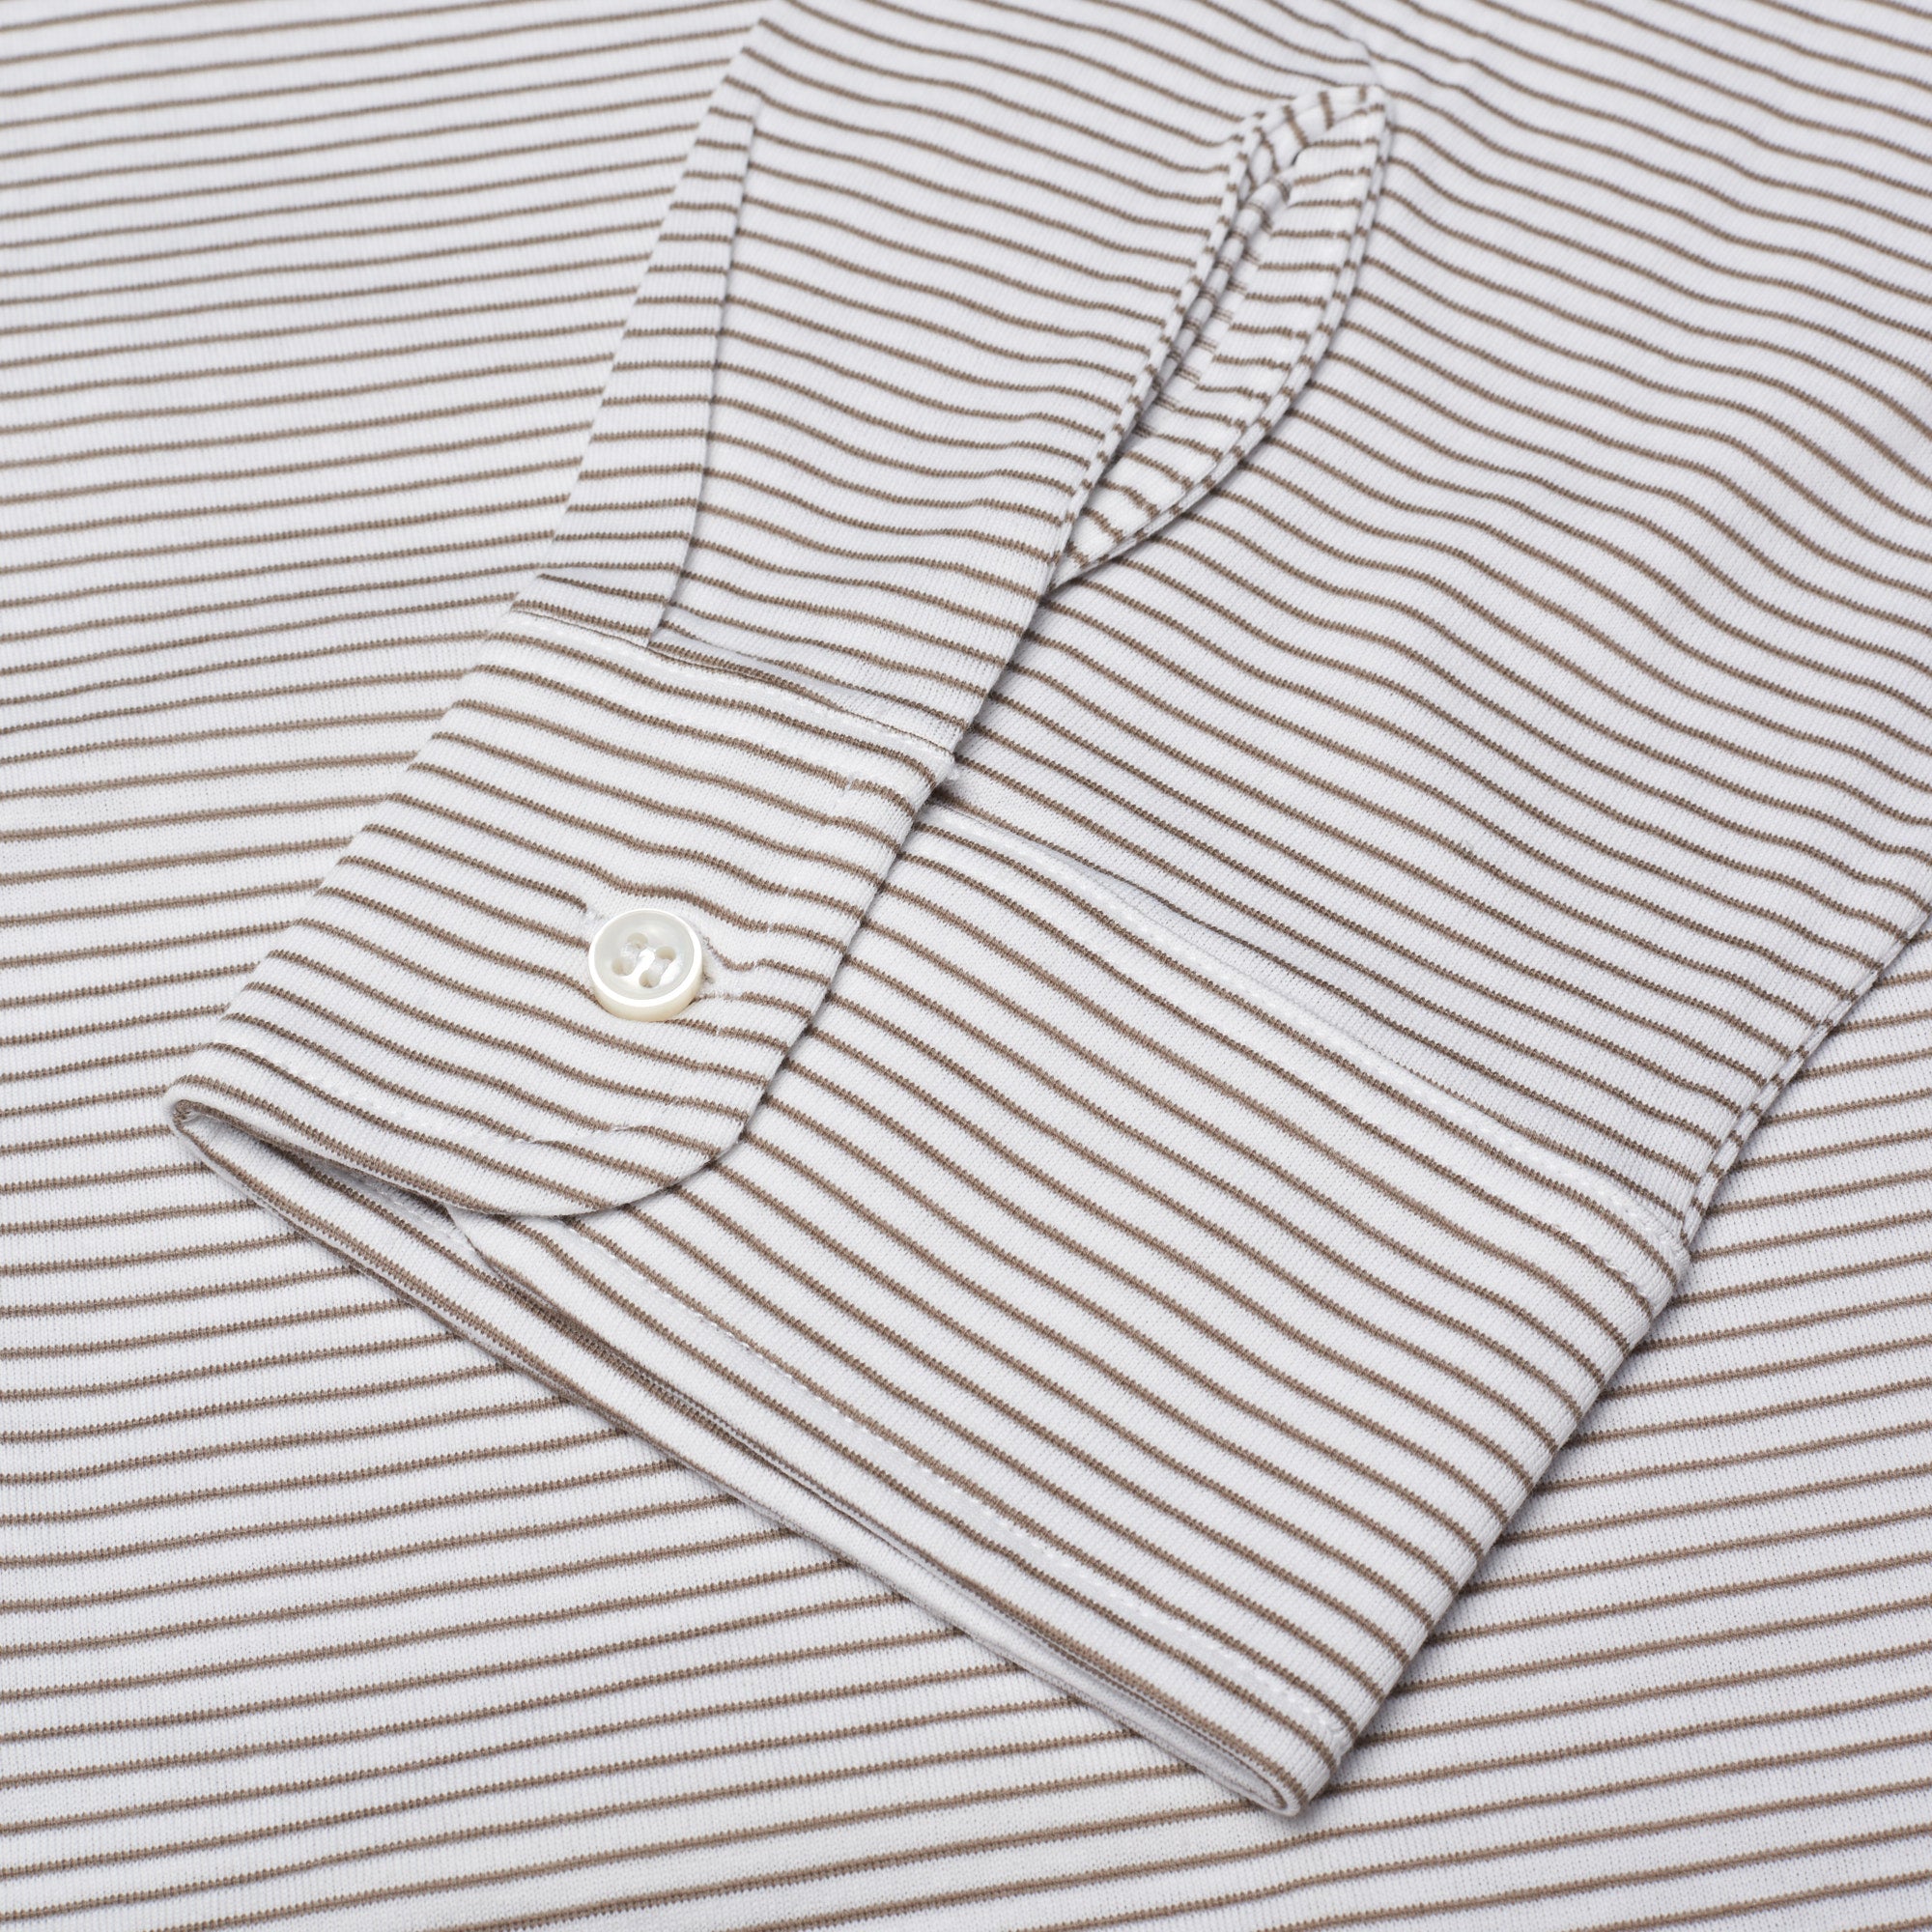 FEDELI "Libeccio" Gray Striped Cotton Jersey Long Sleeve Polo Shirt EU 58 NEW US 3XL FEDELI